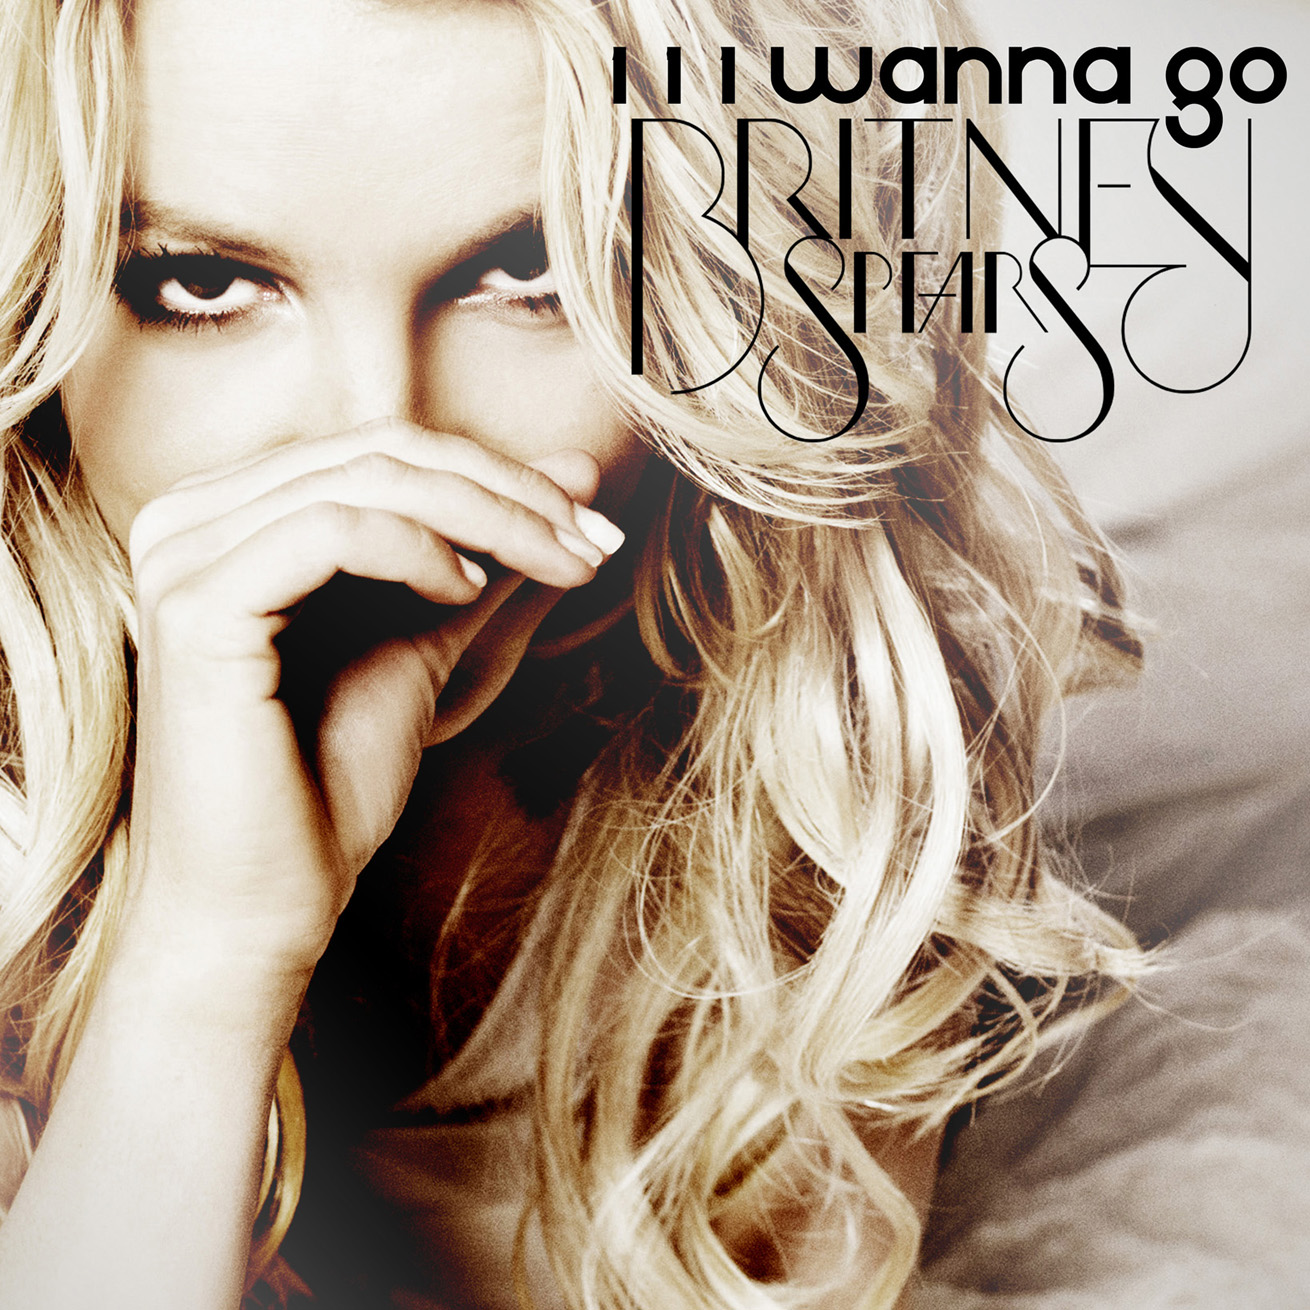 http://1.bp.blogspot.com/-7FOaIRzw_zs/TiSf0oC8m8I/AAAAAAAABi0/Z5MYVgGgHs0/s1600/Britney-Spears-I-I-I-Wanna-Go-FanMade-Stevie-G-1.jpg